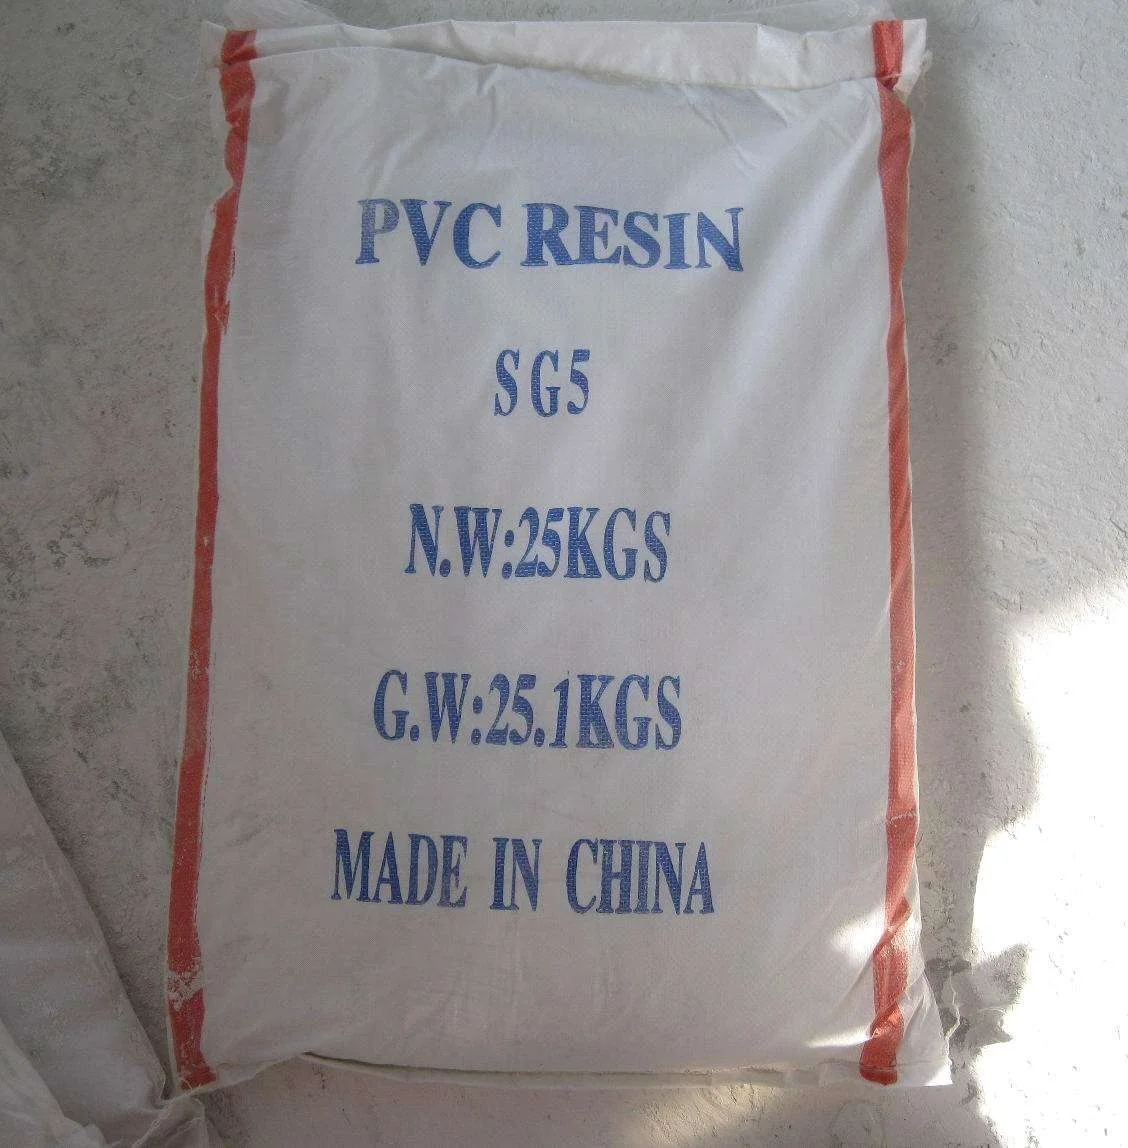 
PVC resin SG-5 price 